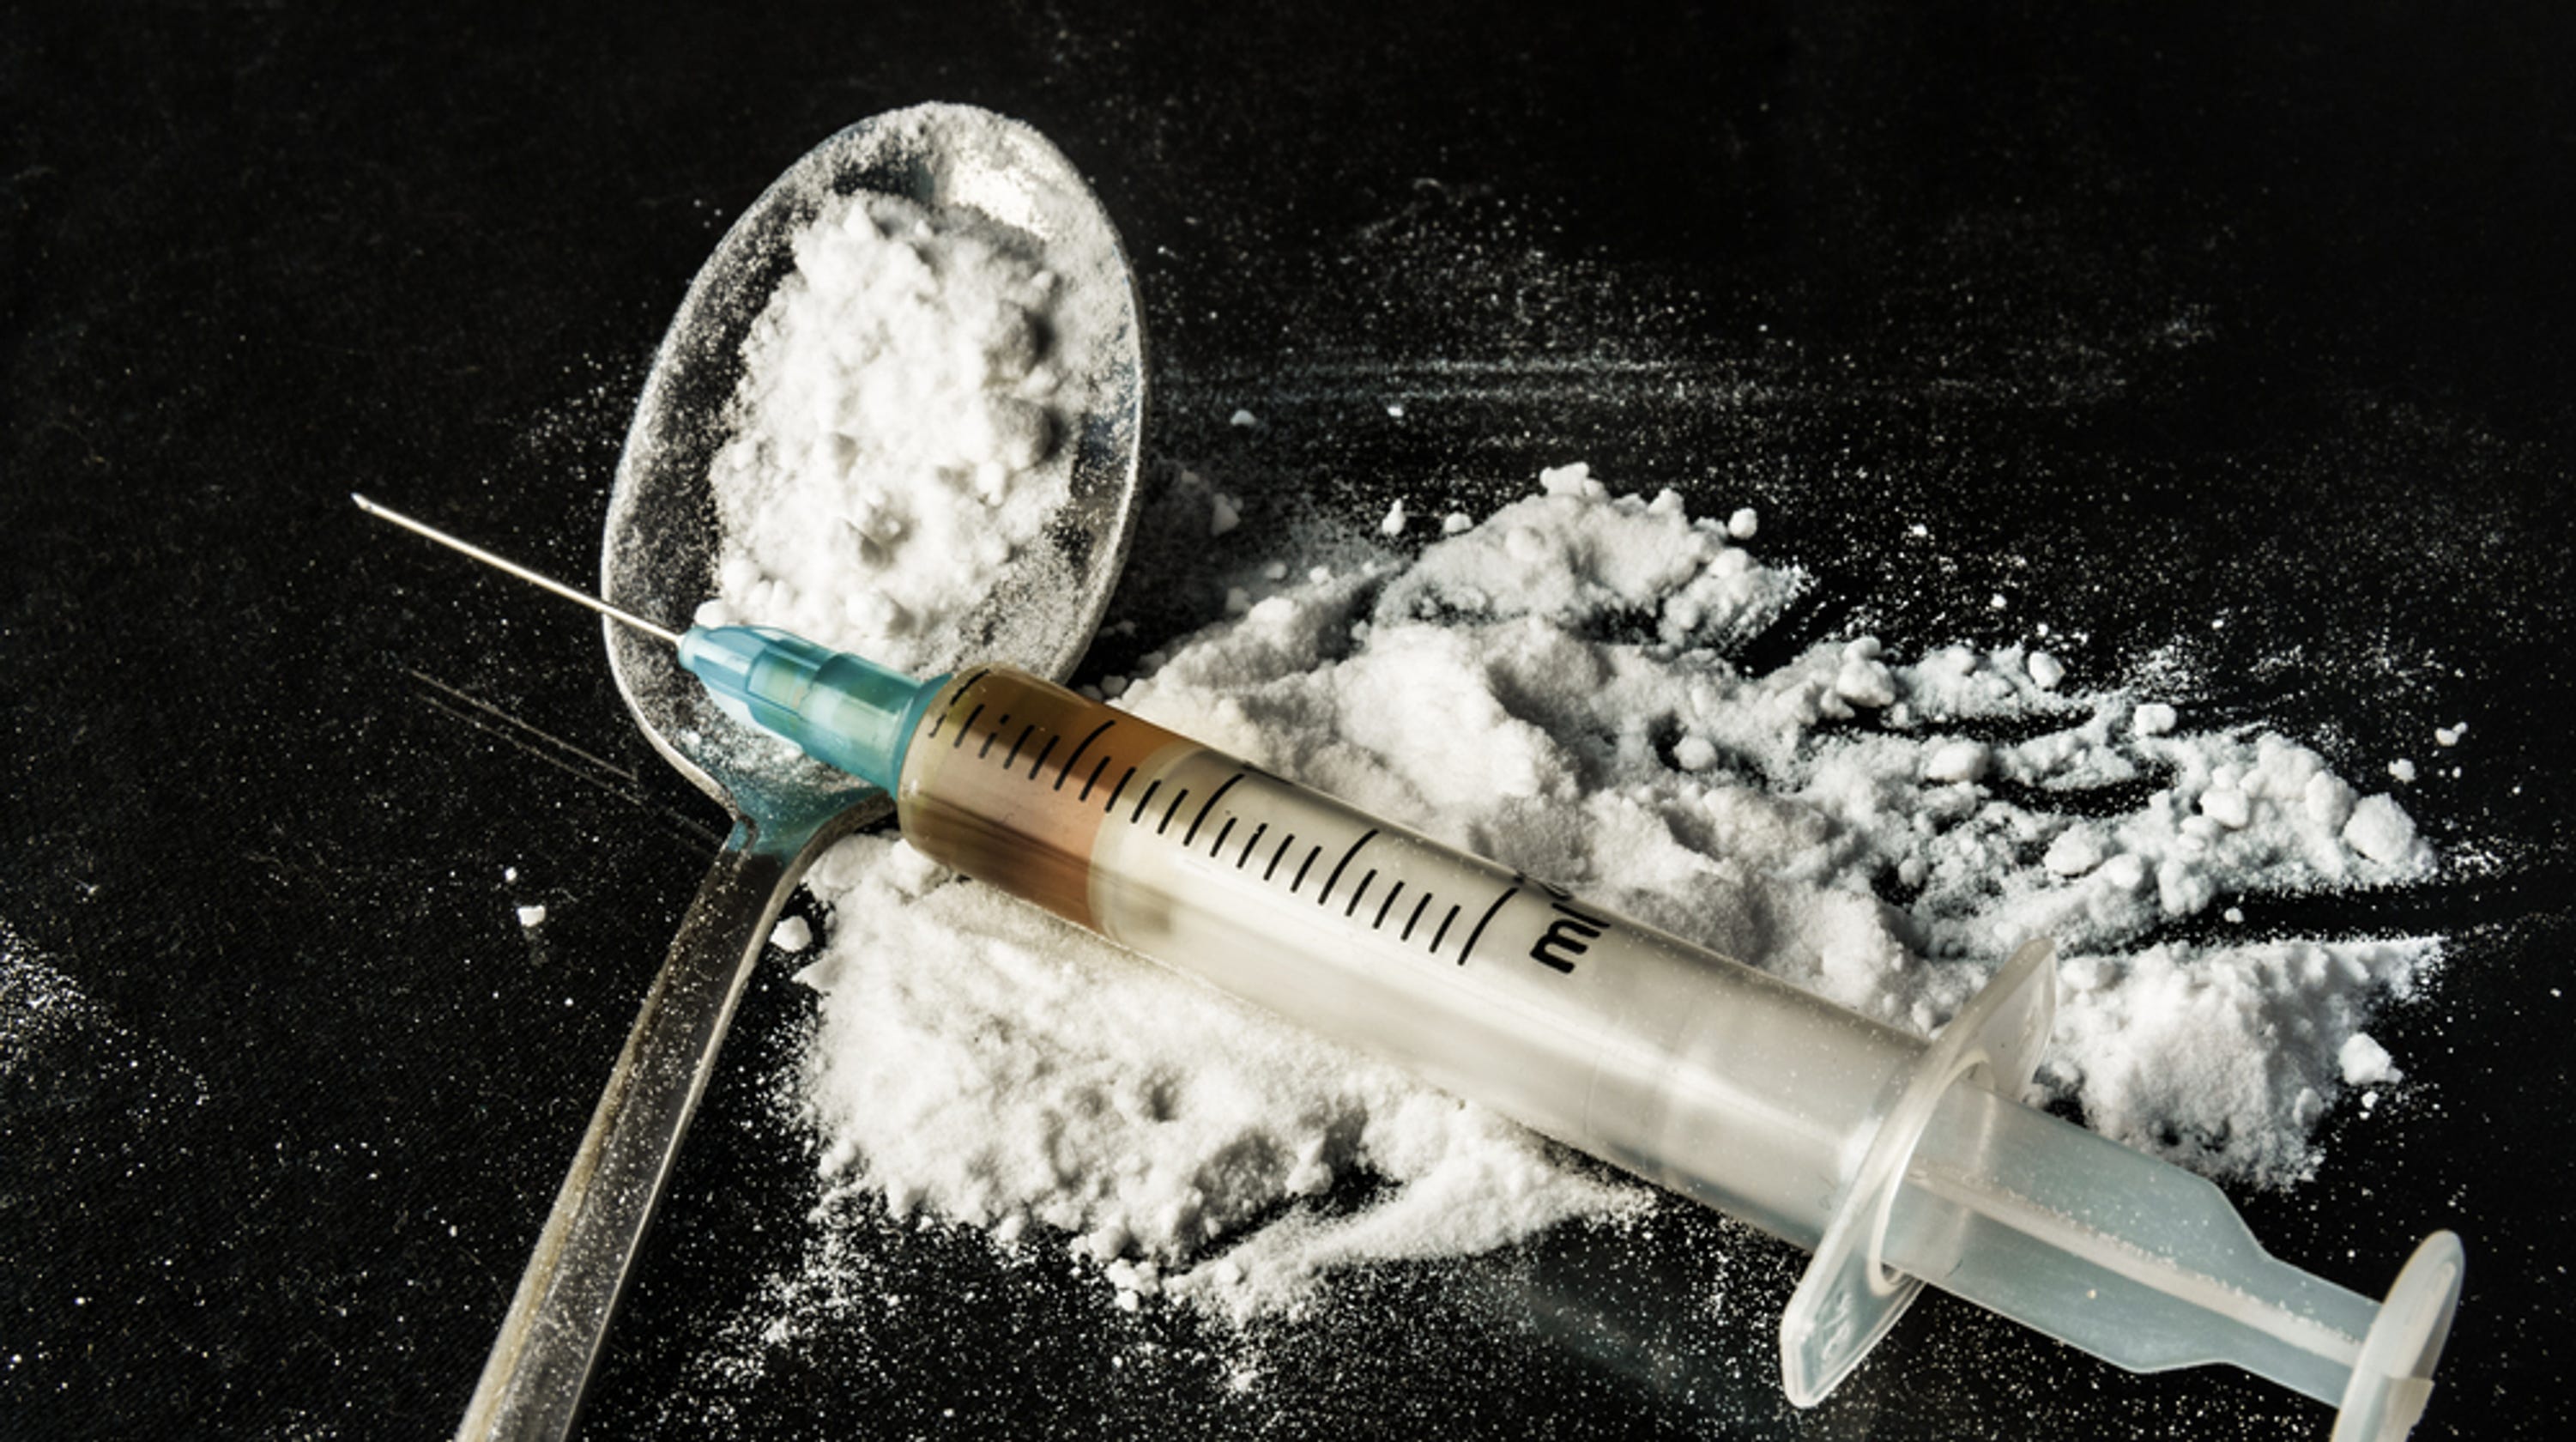 6 sentenced to prison in Murfreesboro fentanyl distribution conspiracy